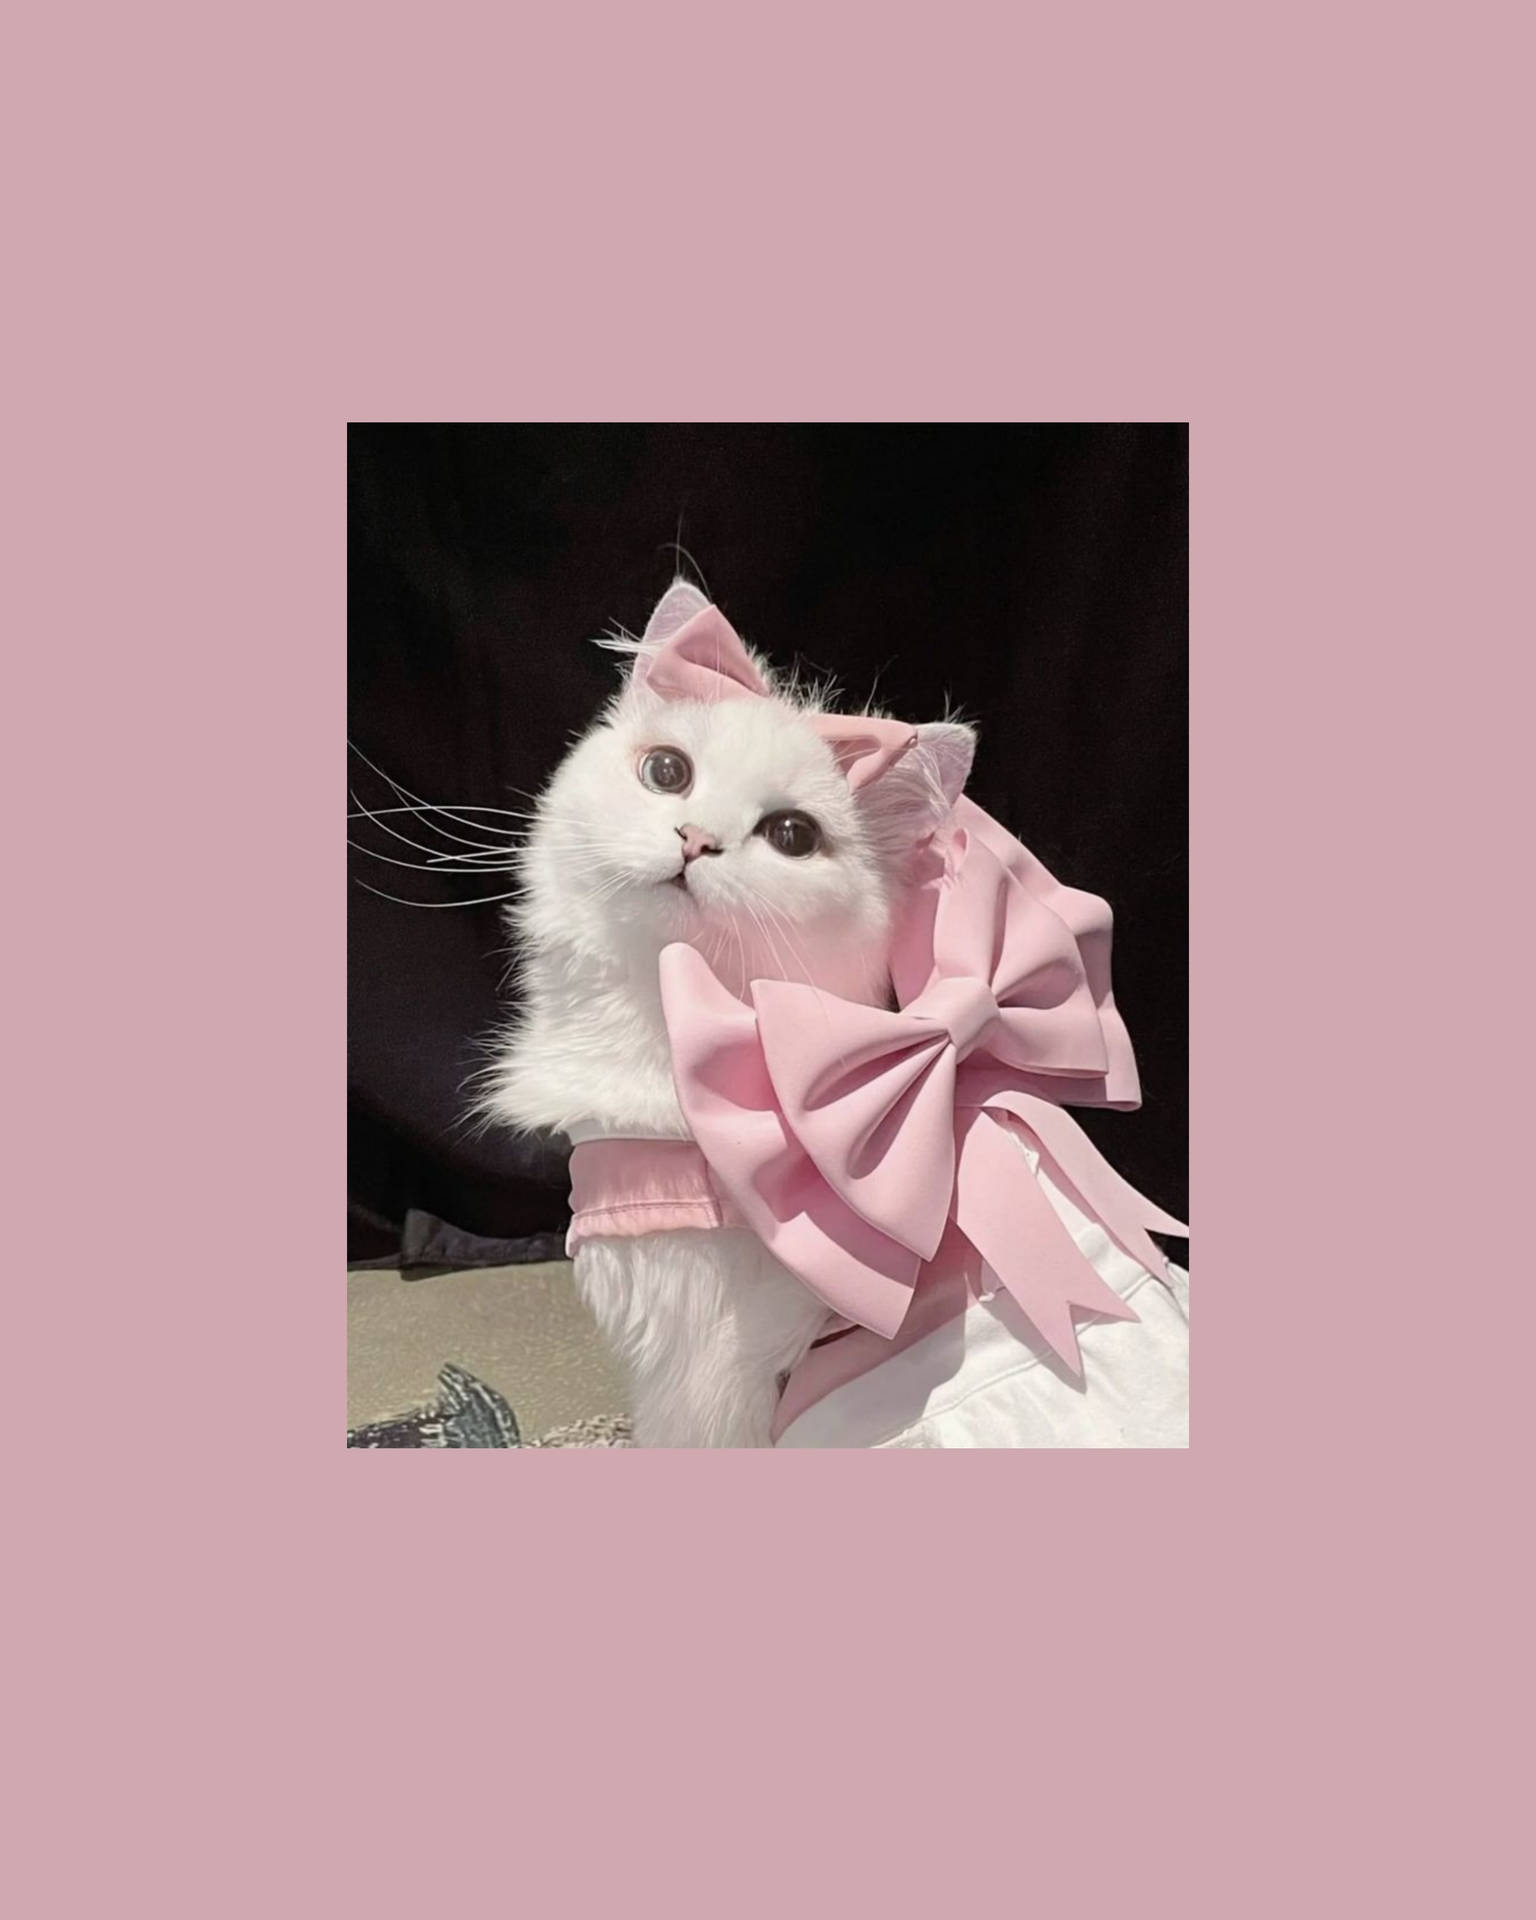 Free Cute Cat Aesthetic Wallpaper Downloads, Cute Cat Aesthetic Wallpaper for FREE